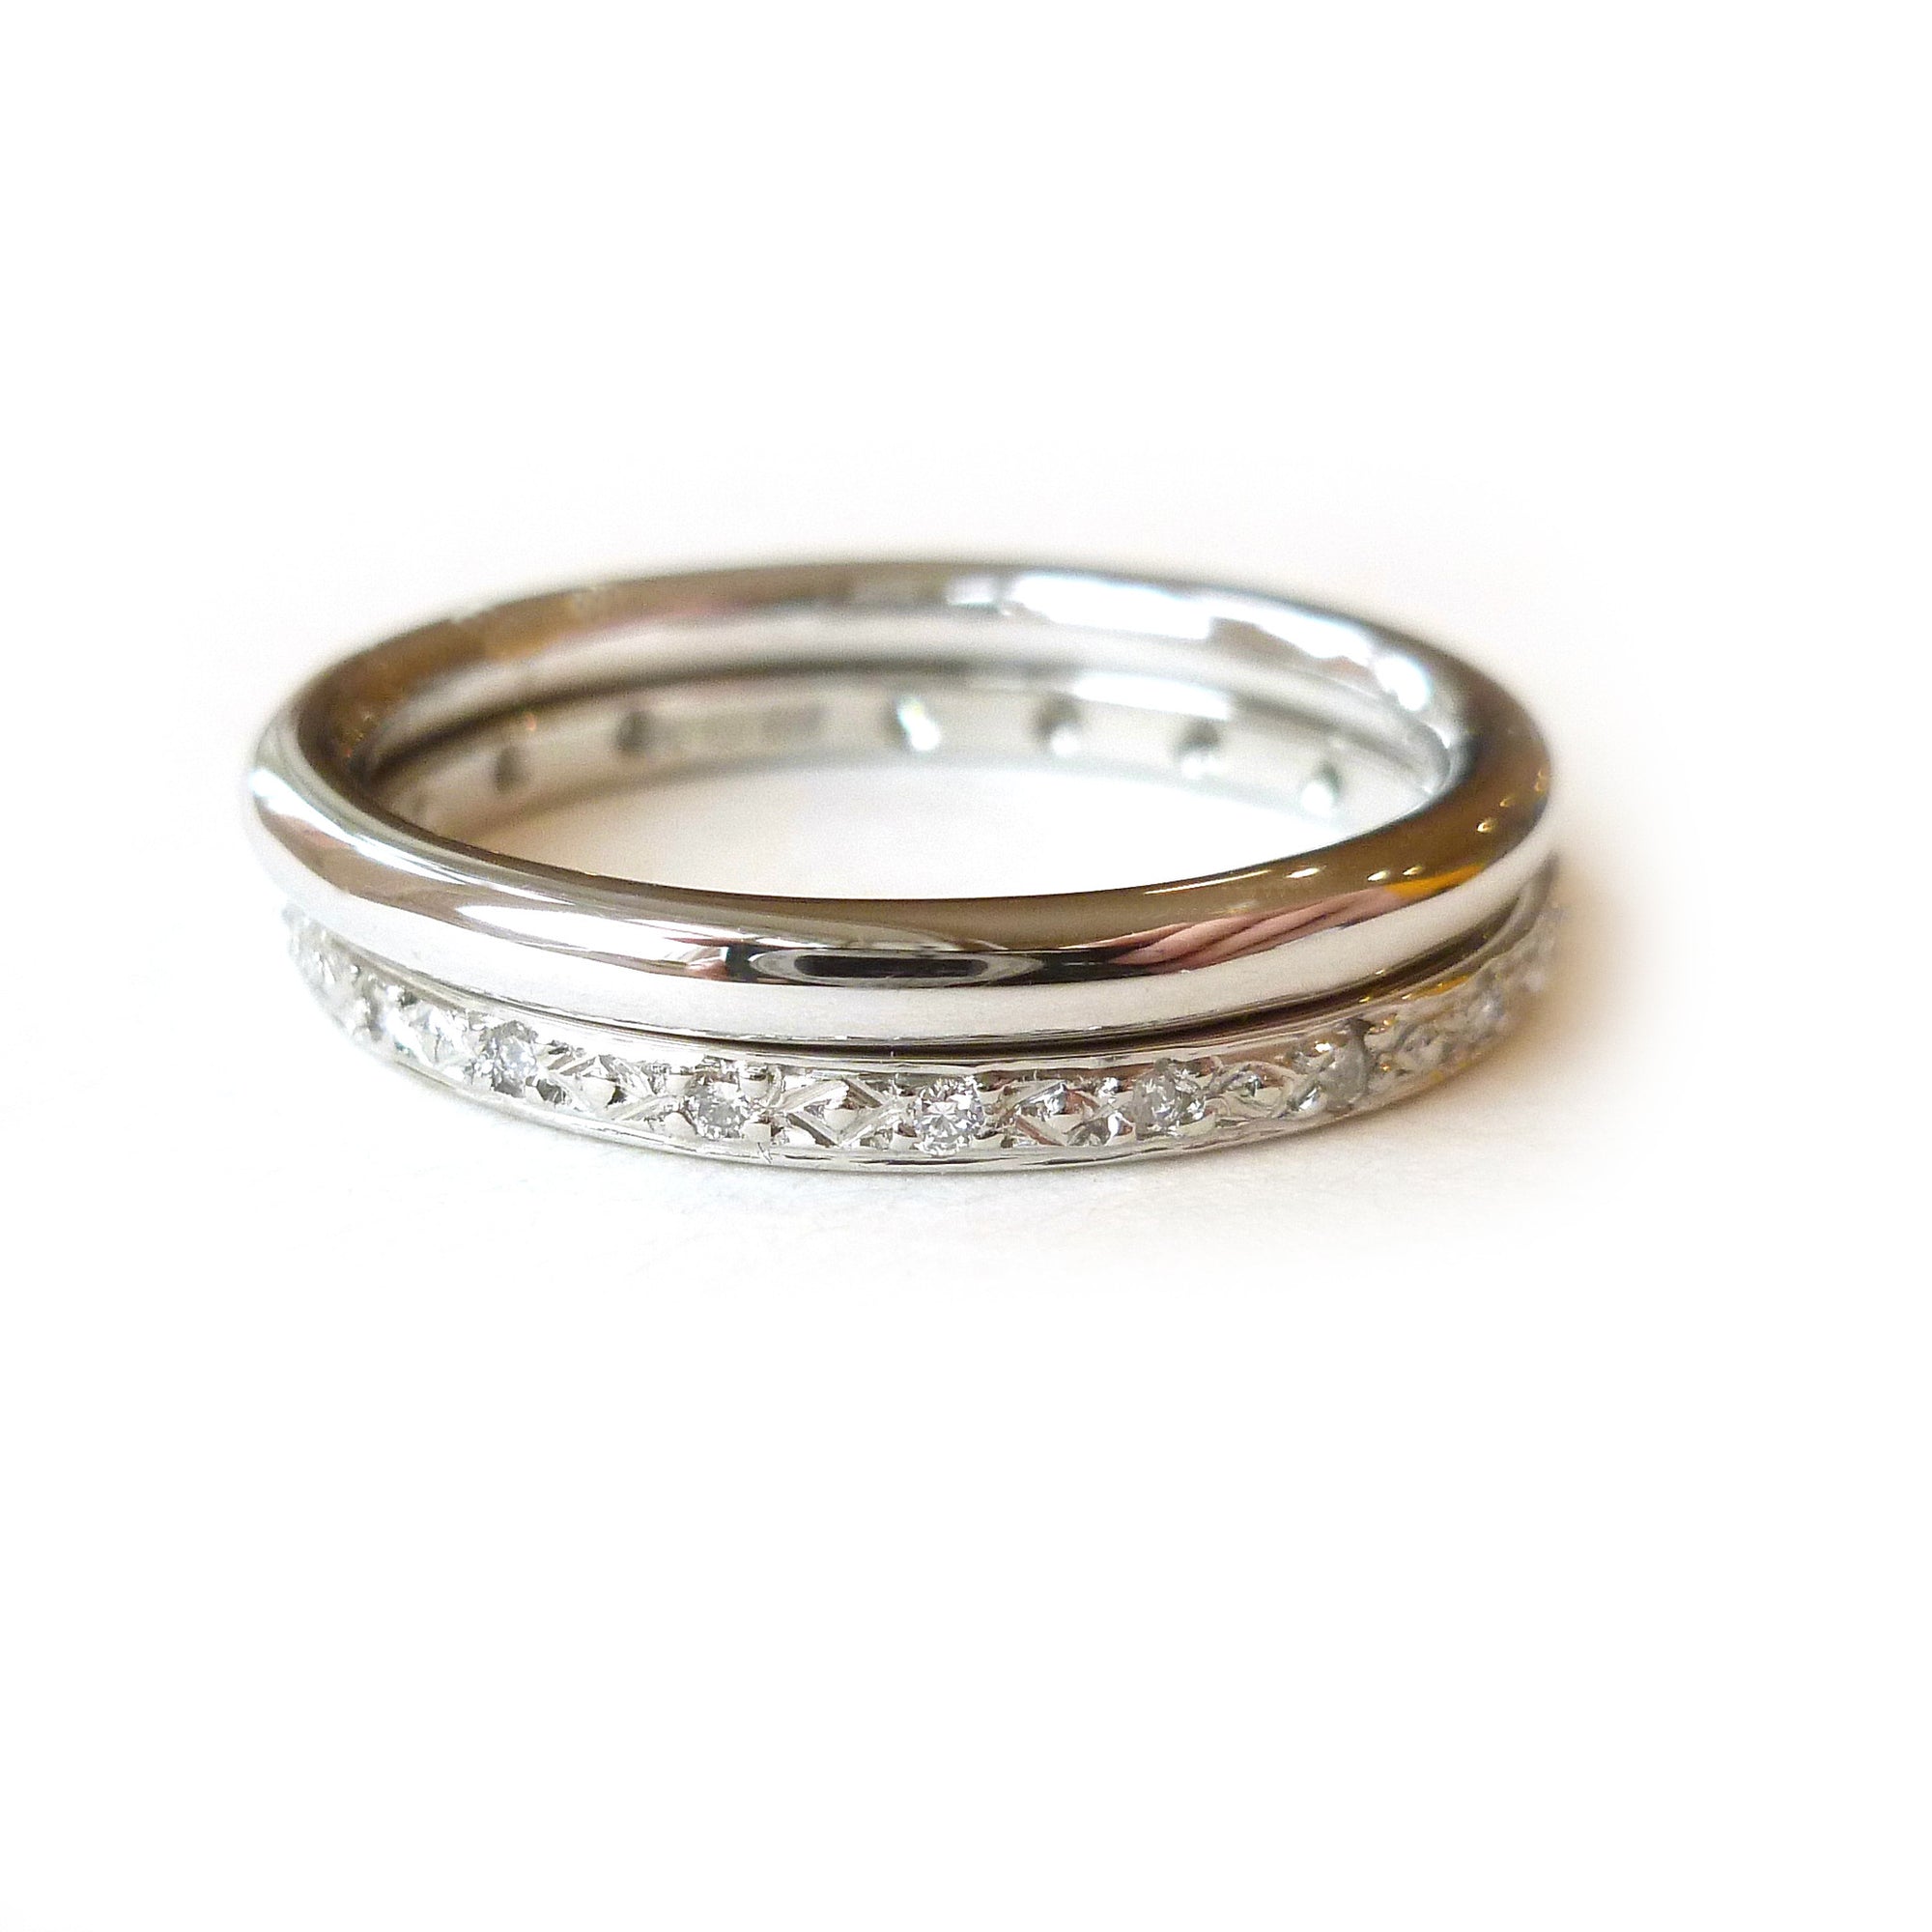 Platinum ring - perfect as a modern wedding ring